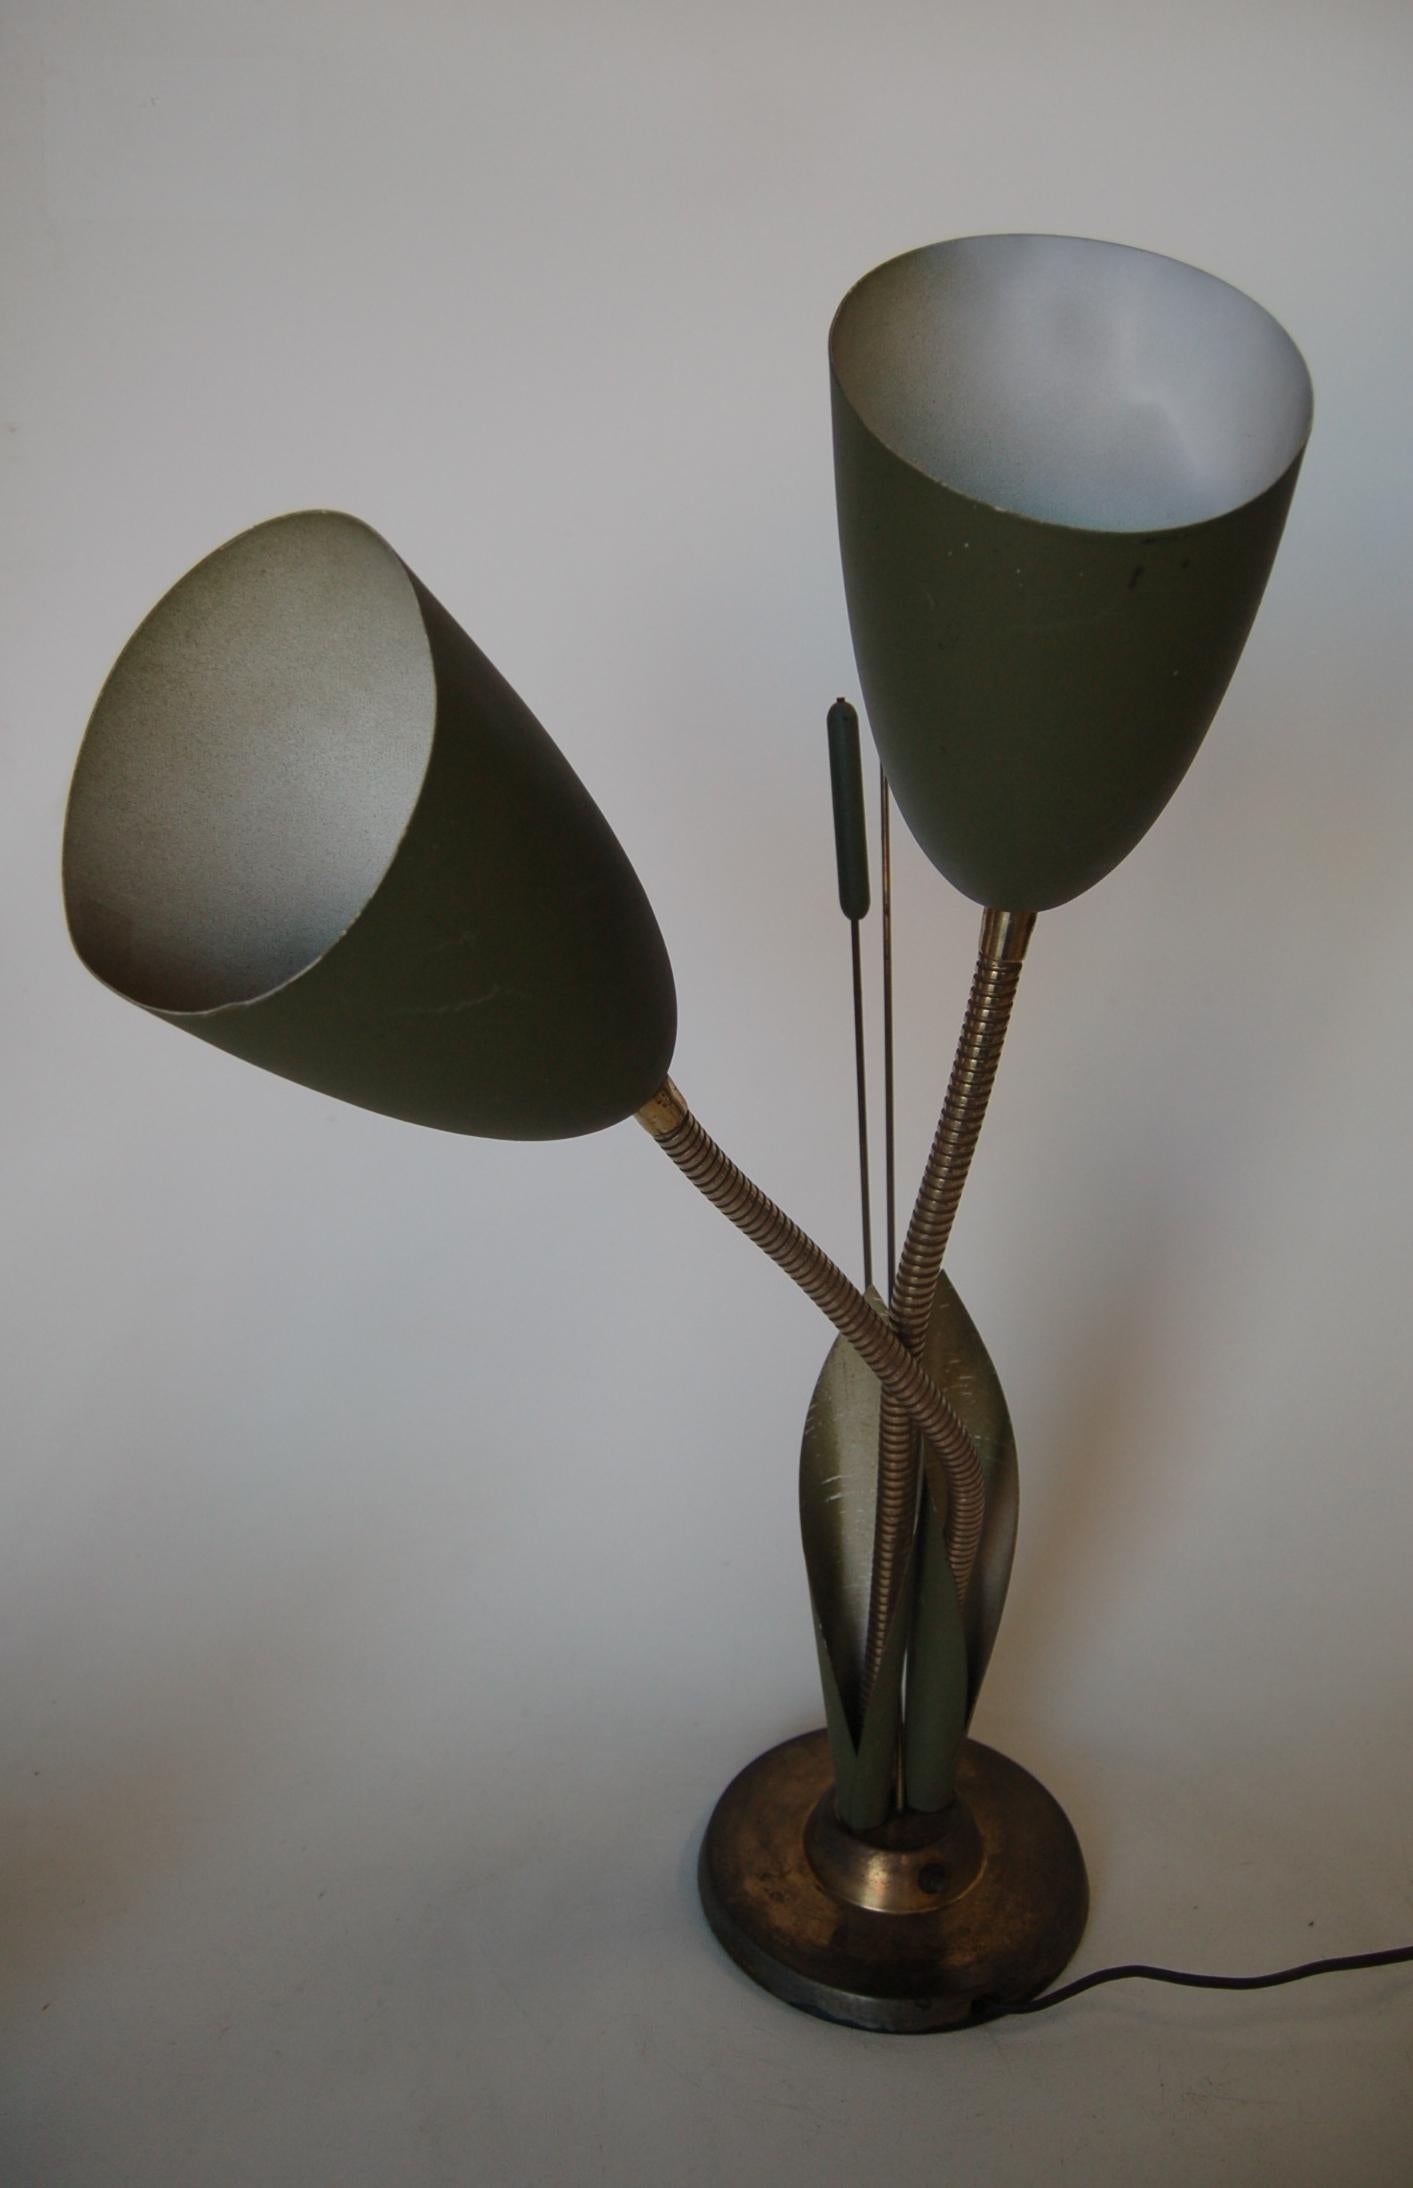 Green metal midcentury double gooseneck adjustable flex arm calla lily cone desk table lamp. 3 way light switch. 

Measures: 7